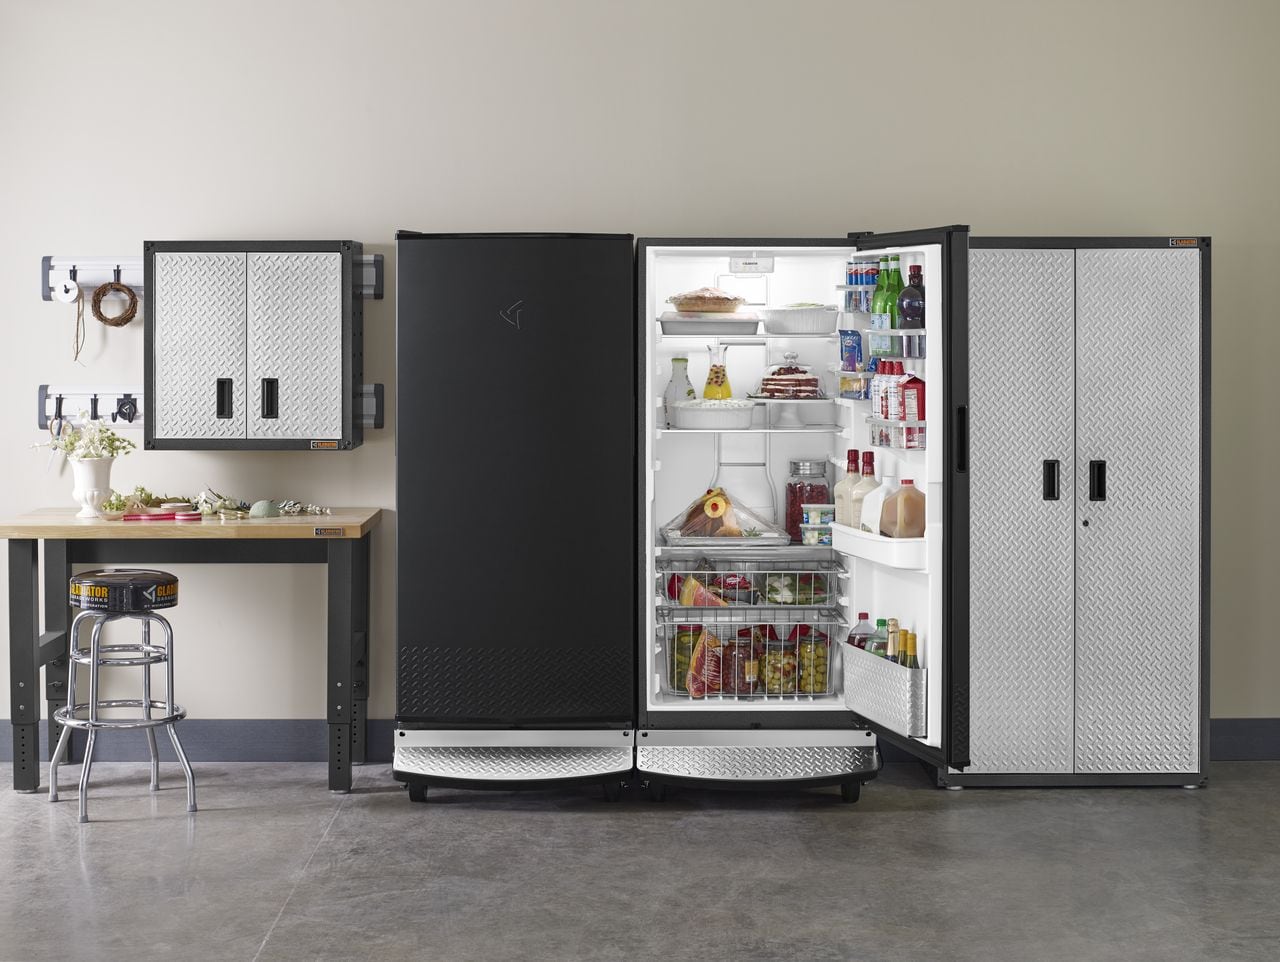 Gladiator GARF30FDGB + GAFZ30FDGB Garage-Ready Refrigerator and Freezer Set